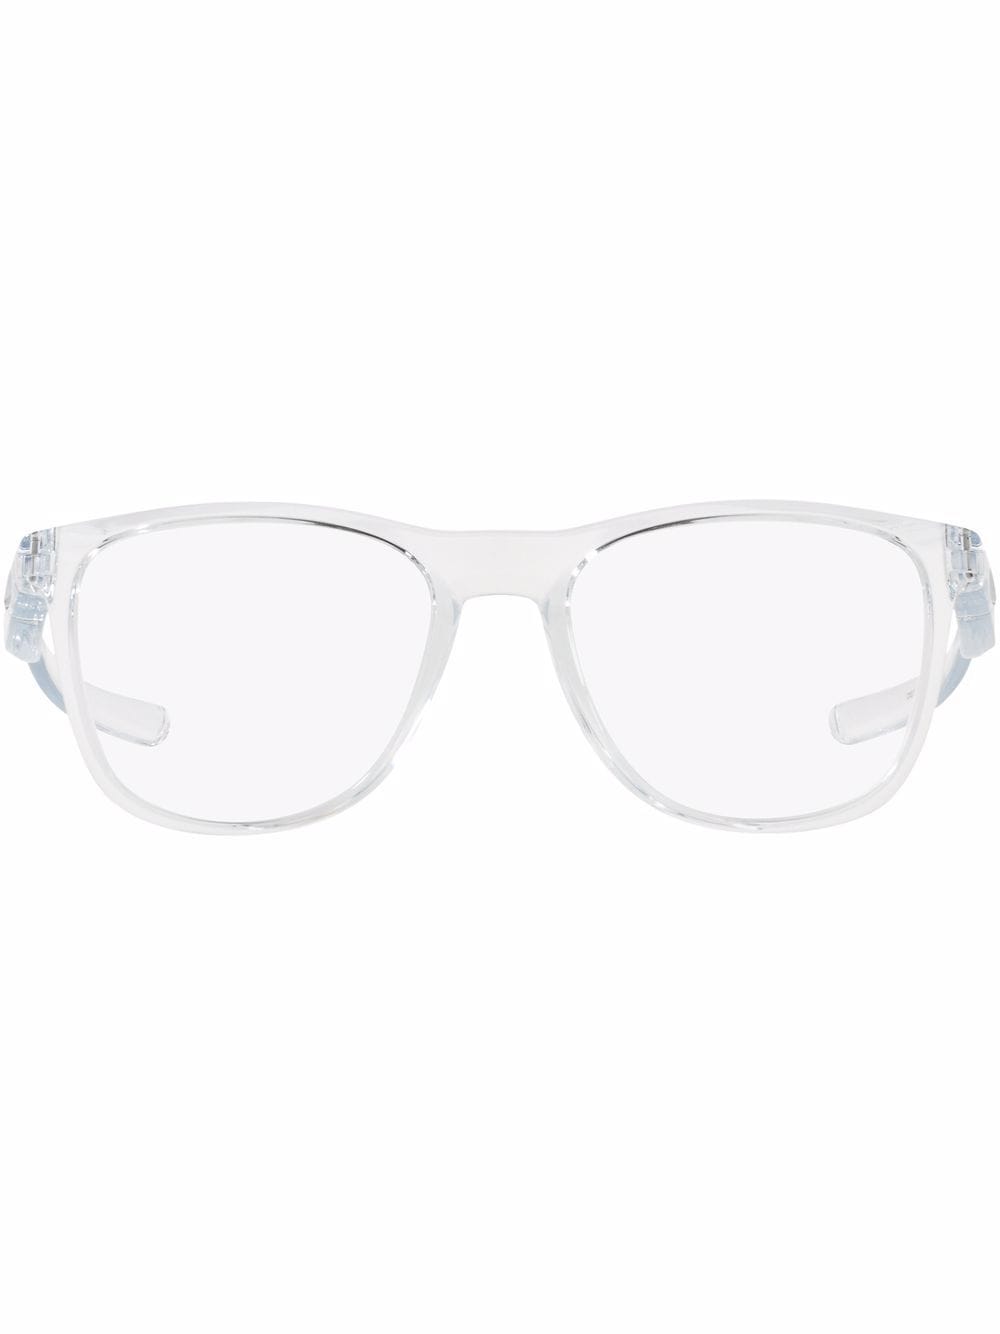 Oakley Transparente Trillbe X Brille - Nude von Oakley